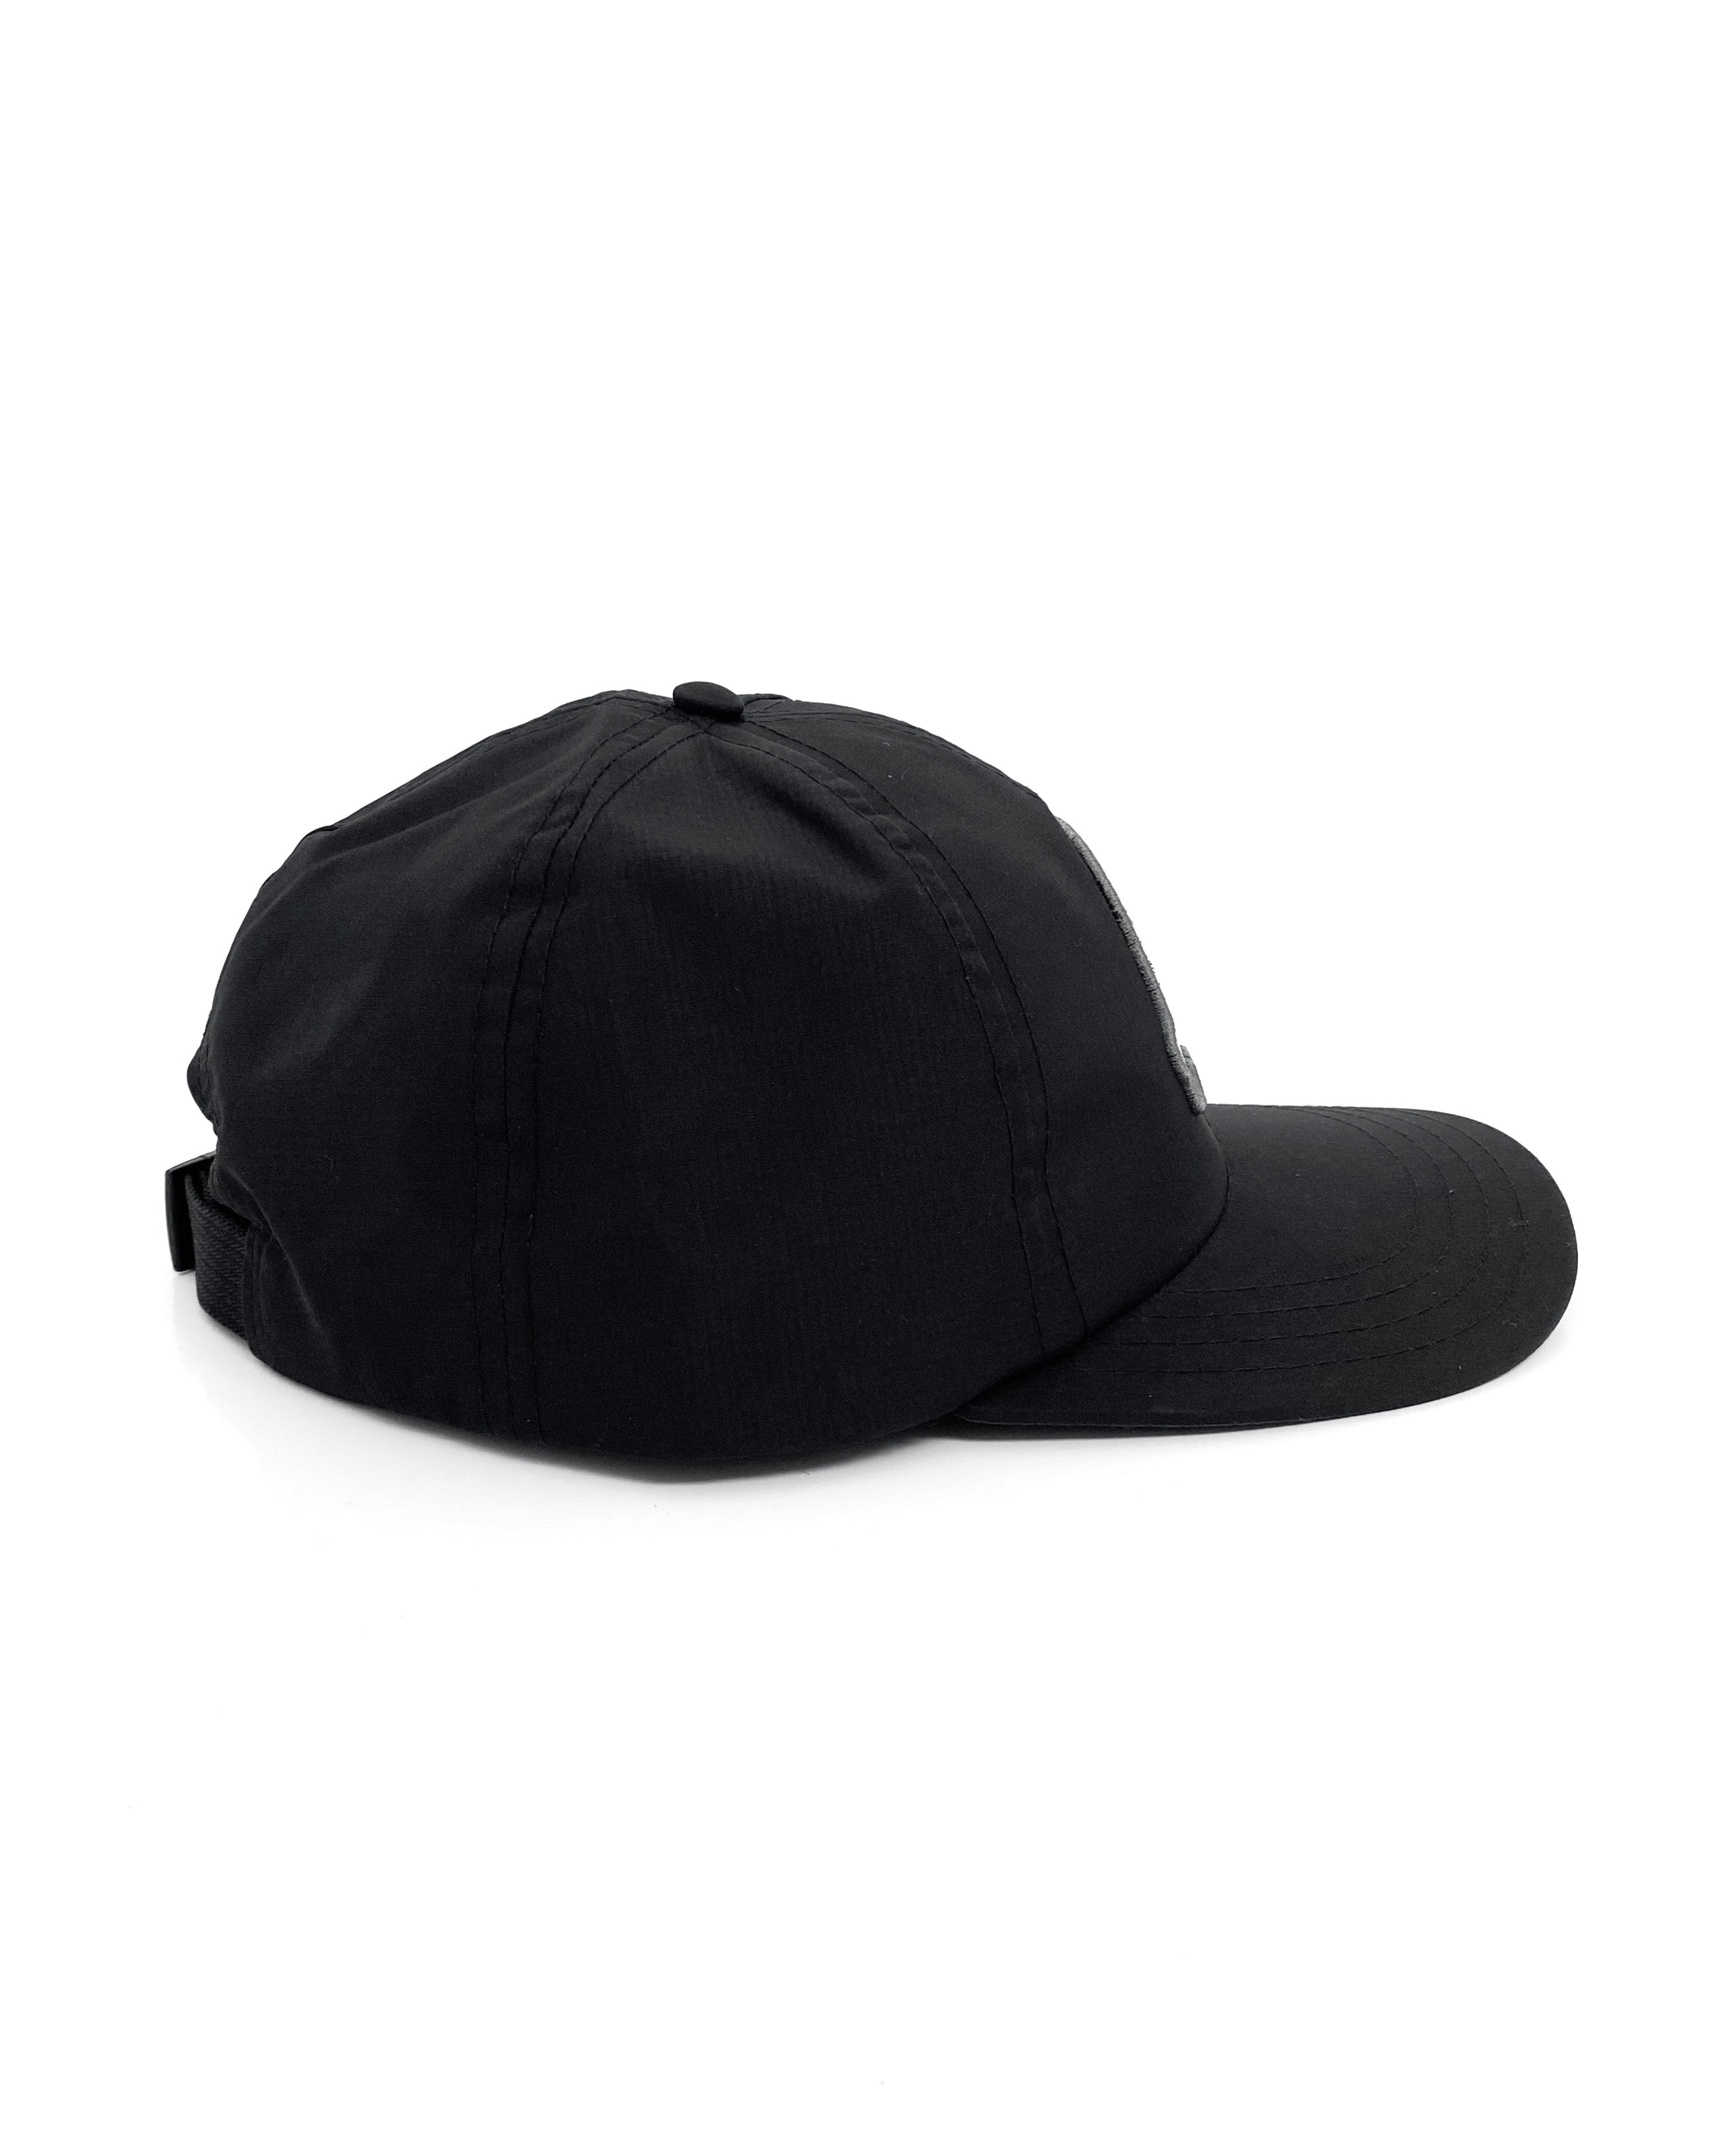 Insignia Black Low Crown Hat - GHOSTSHIP.Supply